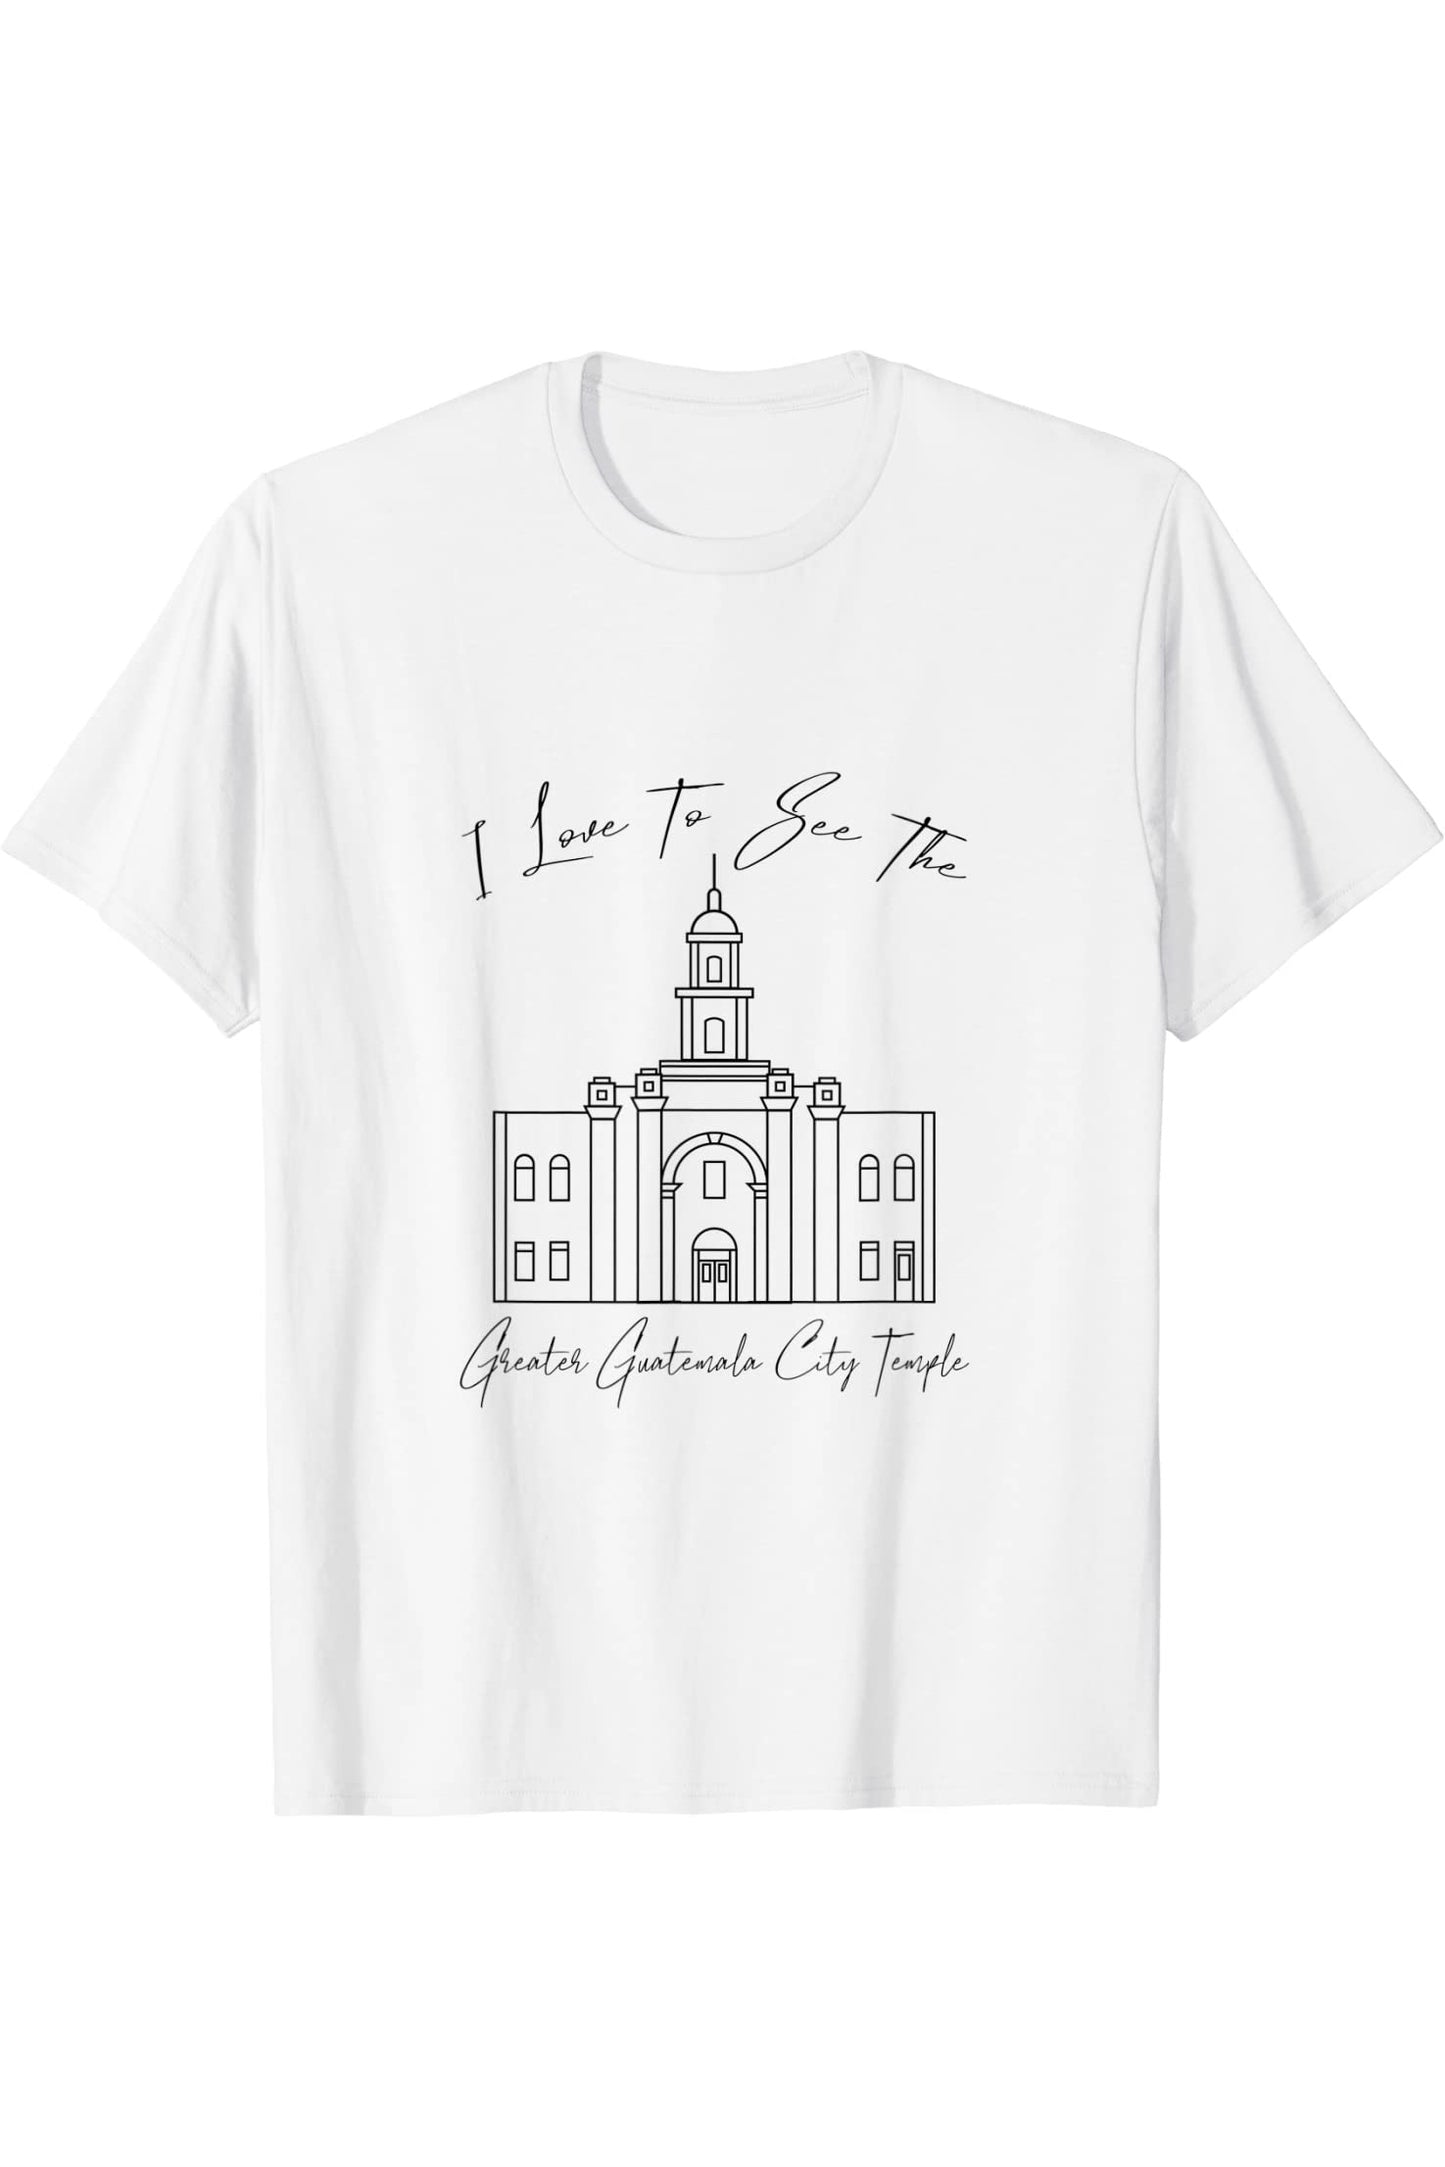 Greater Guatemala City Guatemala Temple T-Shirt - Calligraphy Style (English) US